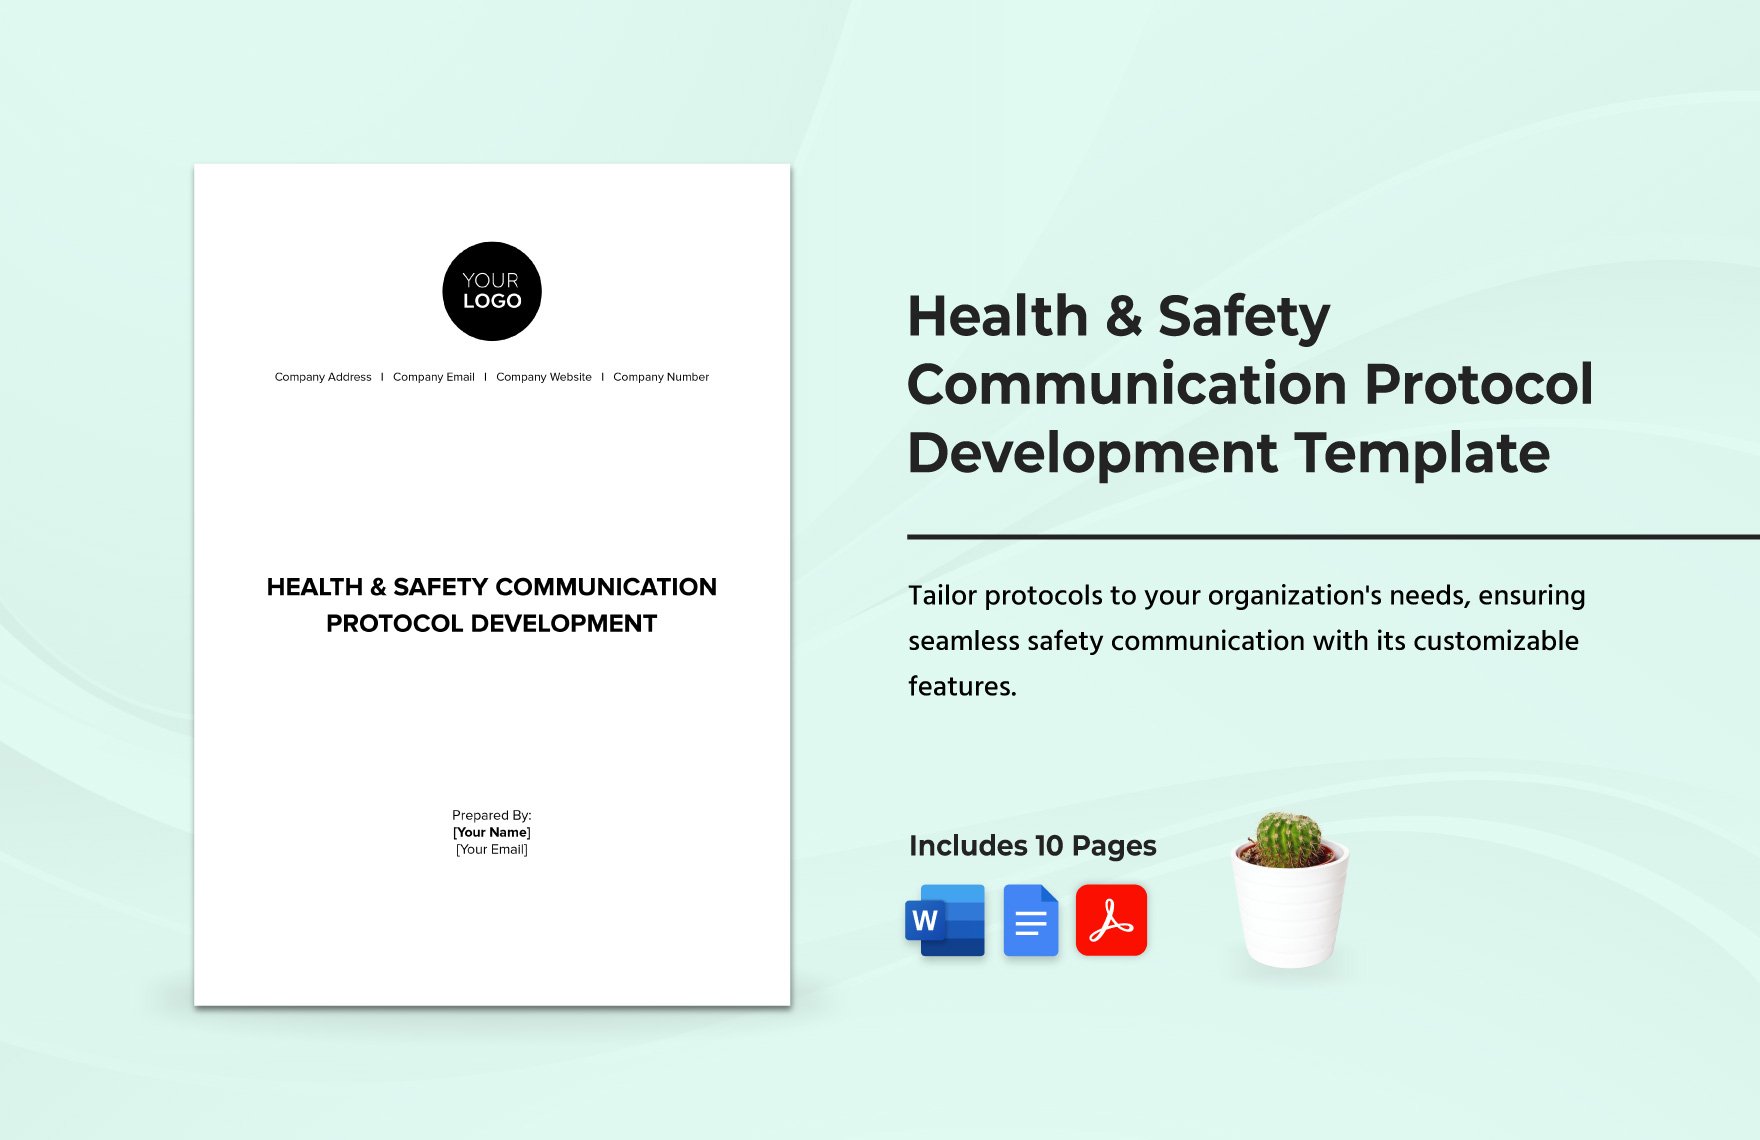 Health & Safety Communication Protocol Development Template